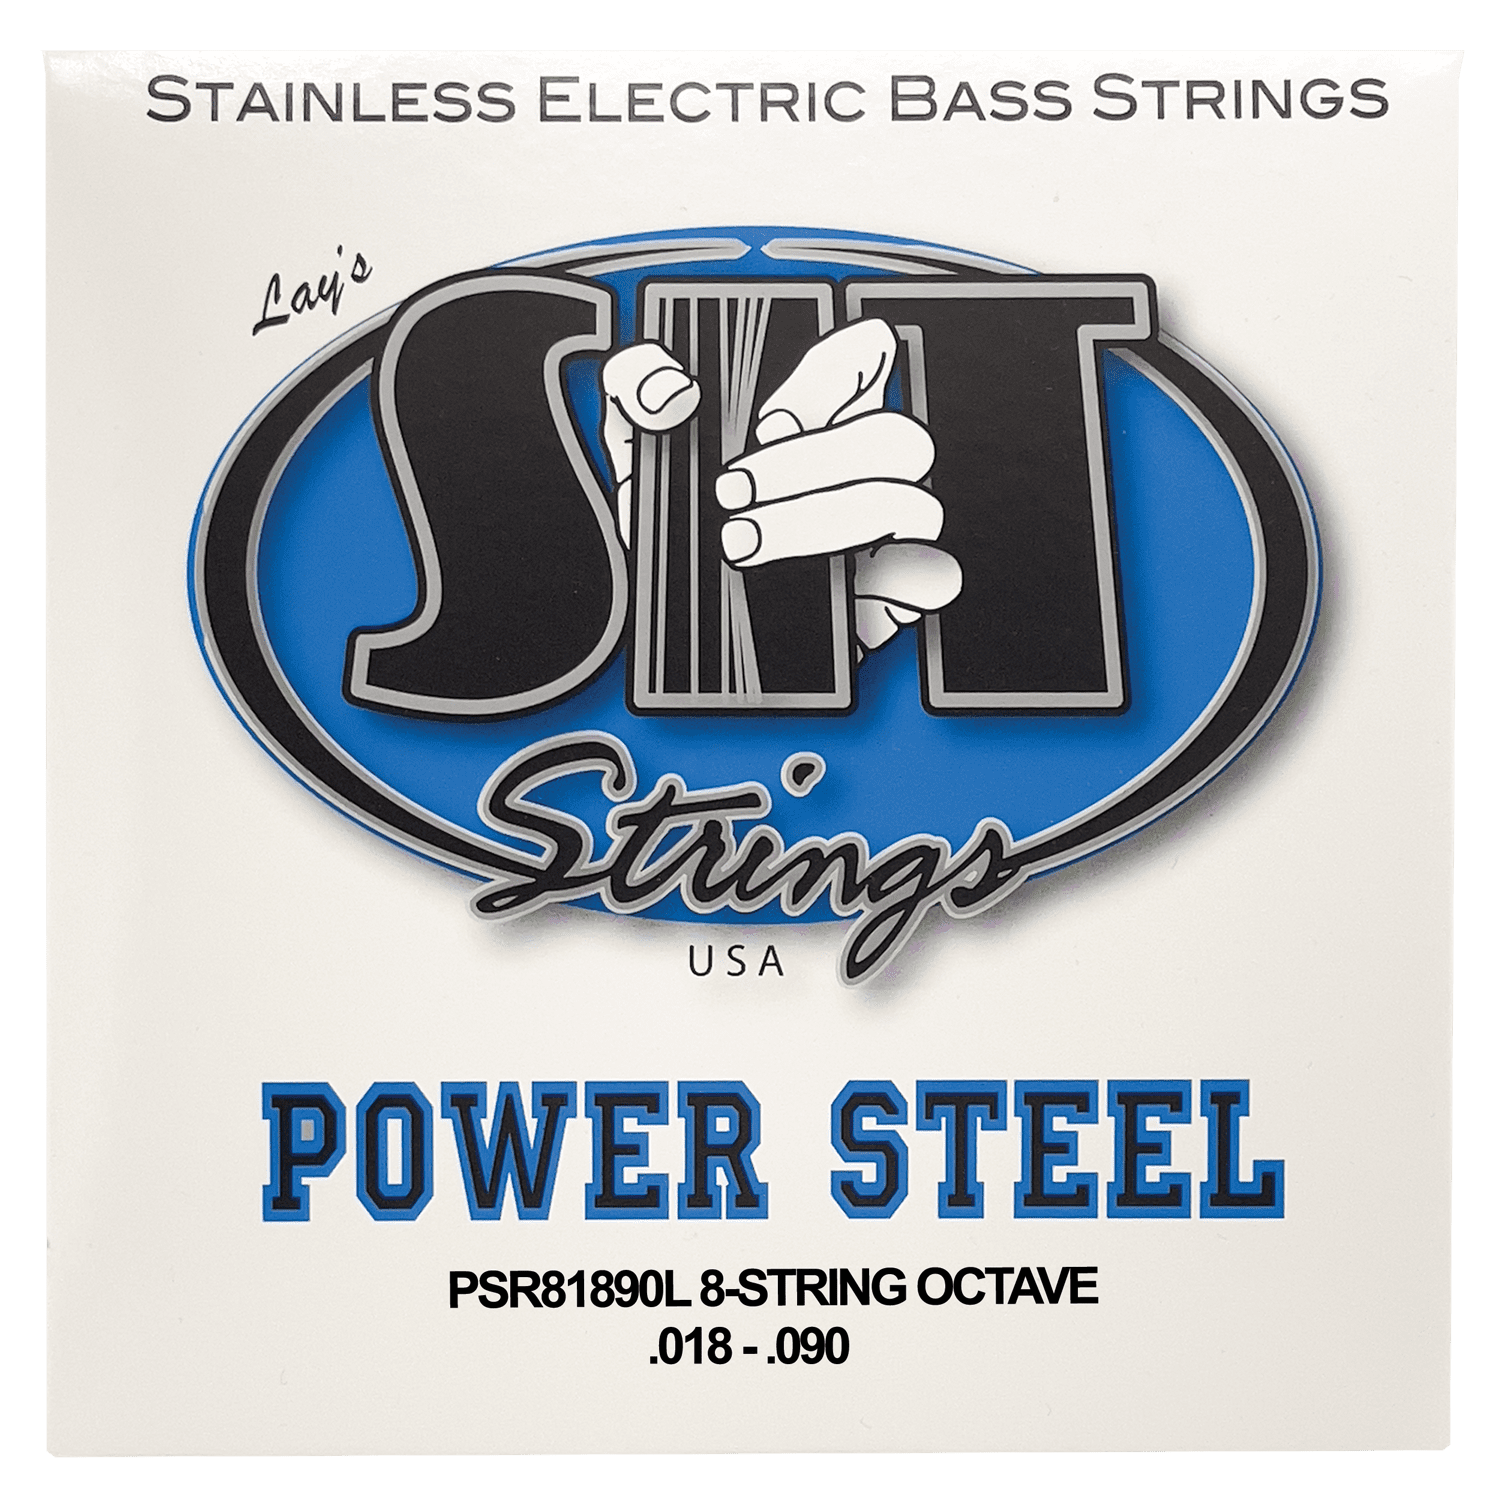 SIT POWER STEEL STAINLESS STEEL BASS - HIENDGUITAR PSR81890L 8-STRING OCTAVE 18-90 PSR81890L 8-STRING OCTAVE 18-90 SIT Bass Strings